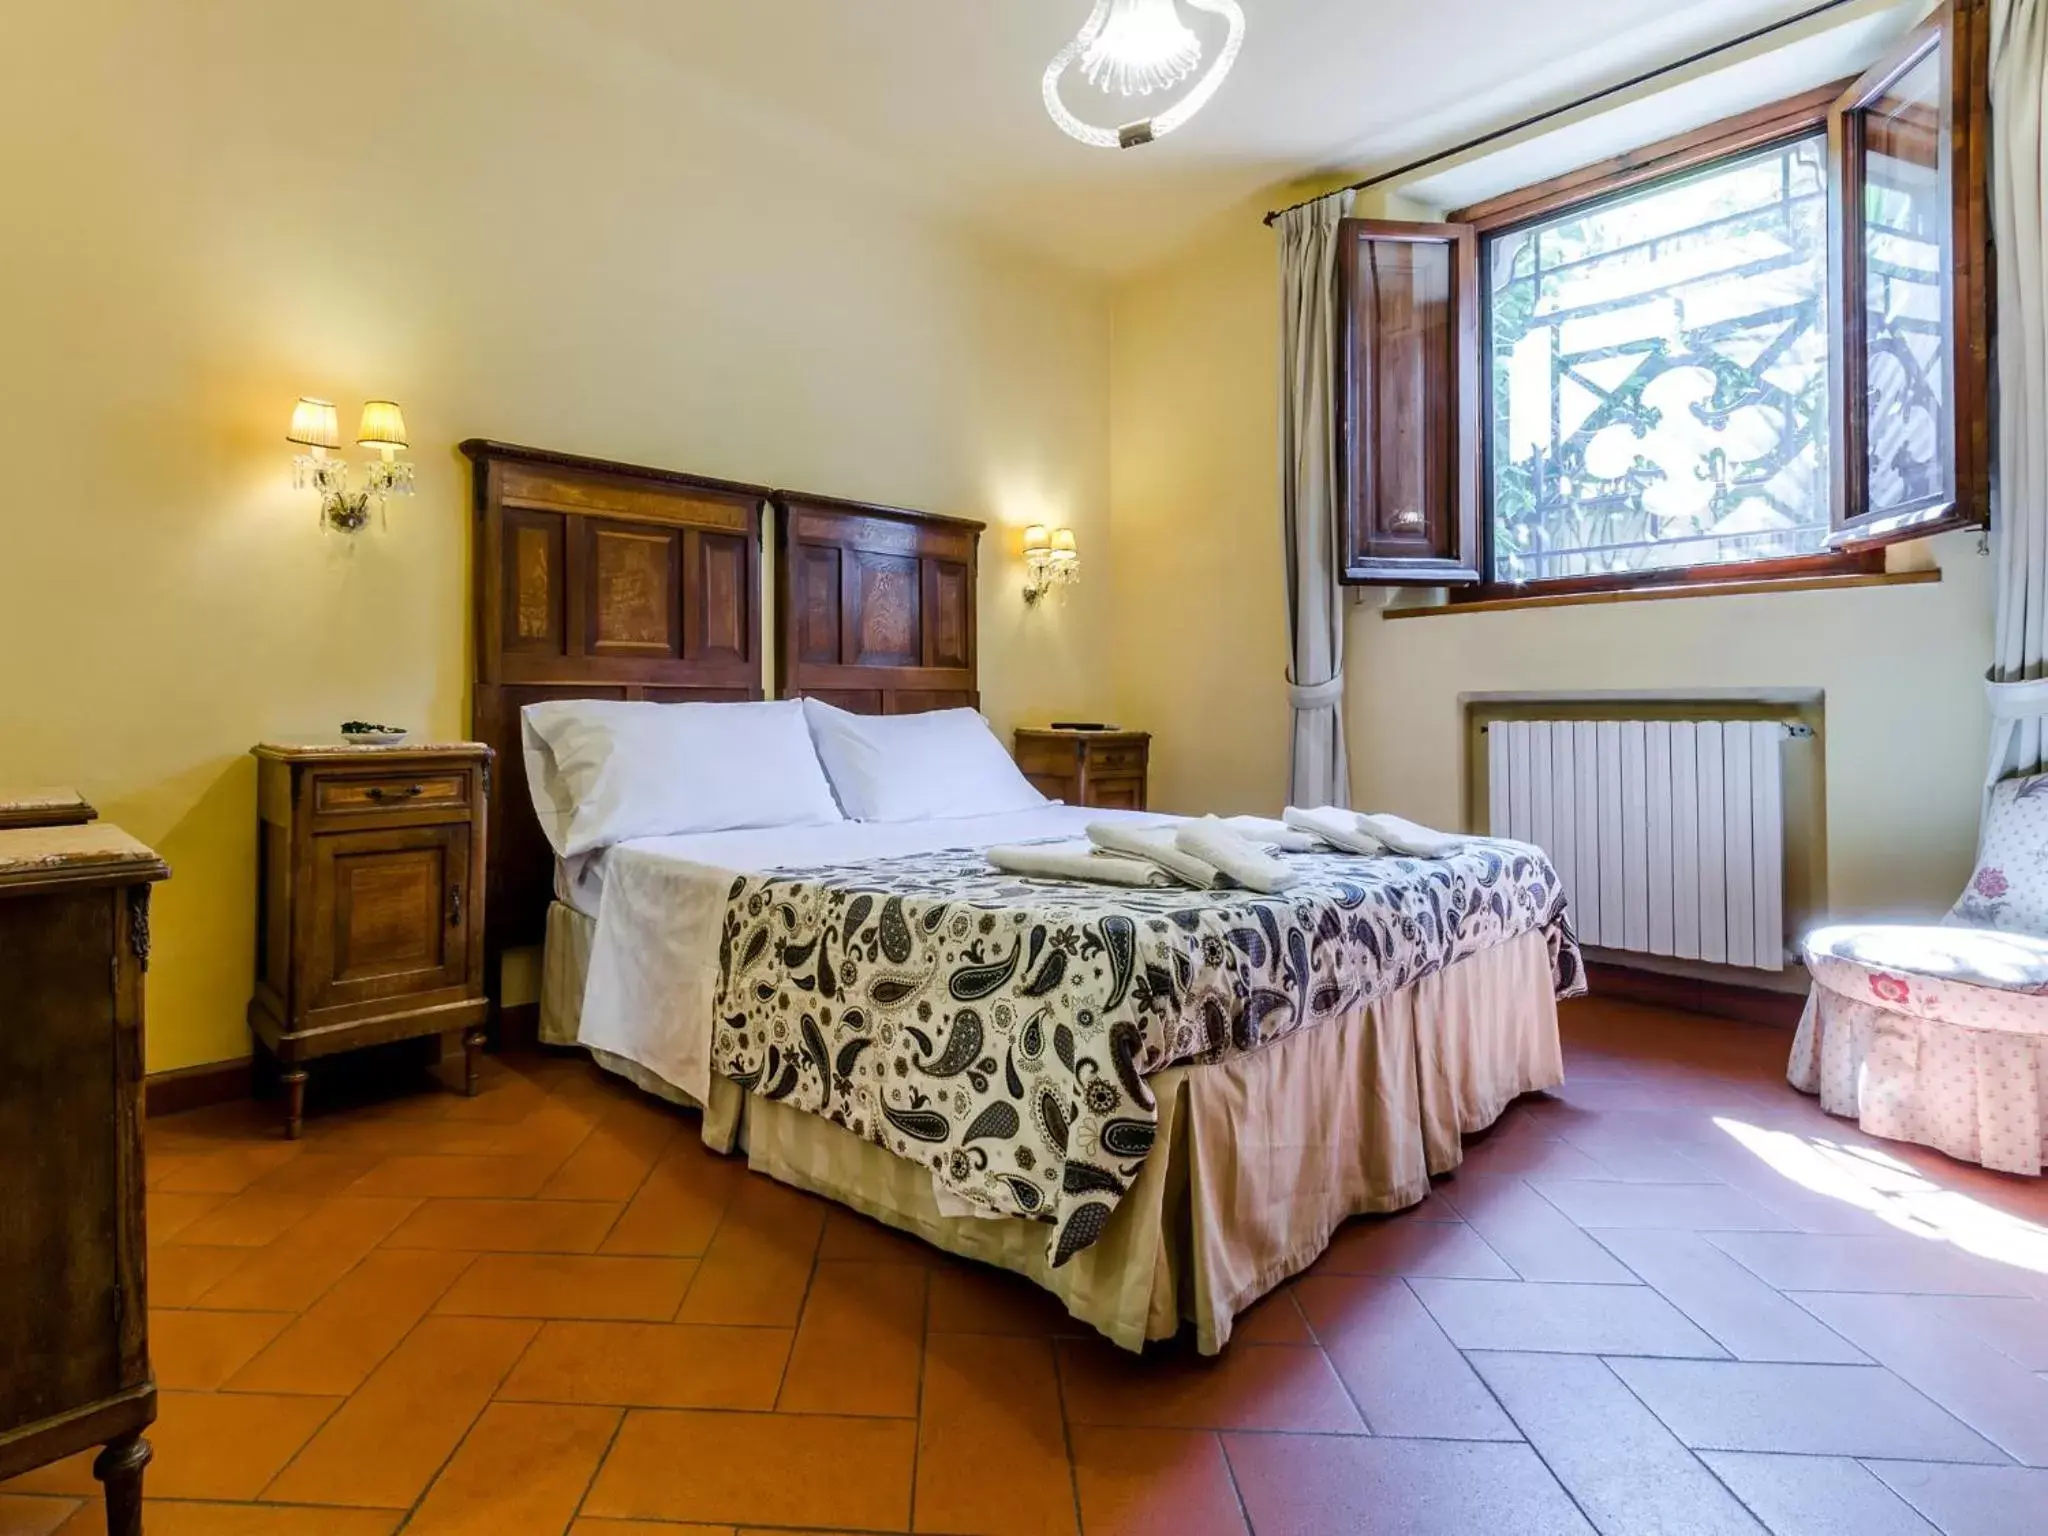 Bed, Room Photo in Sangaggio House B&B